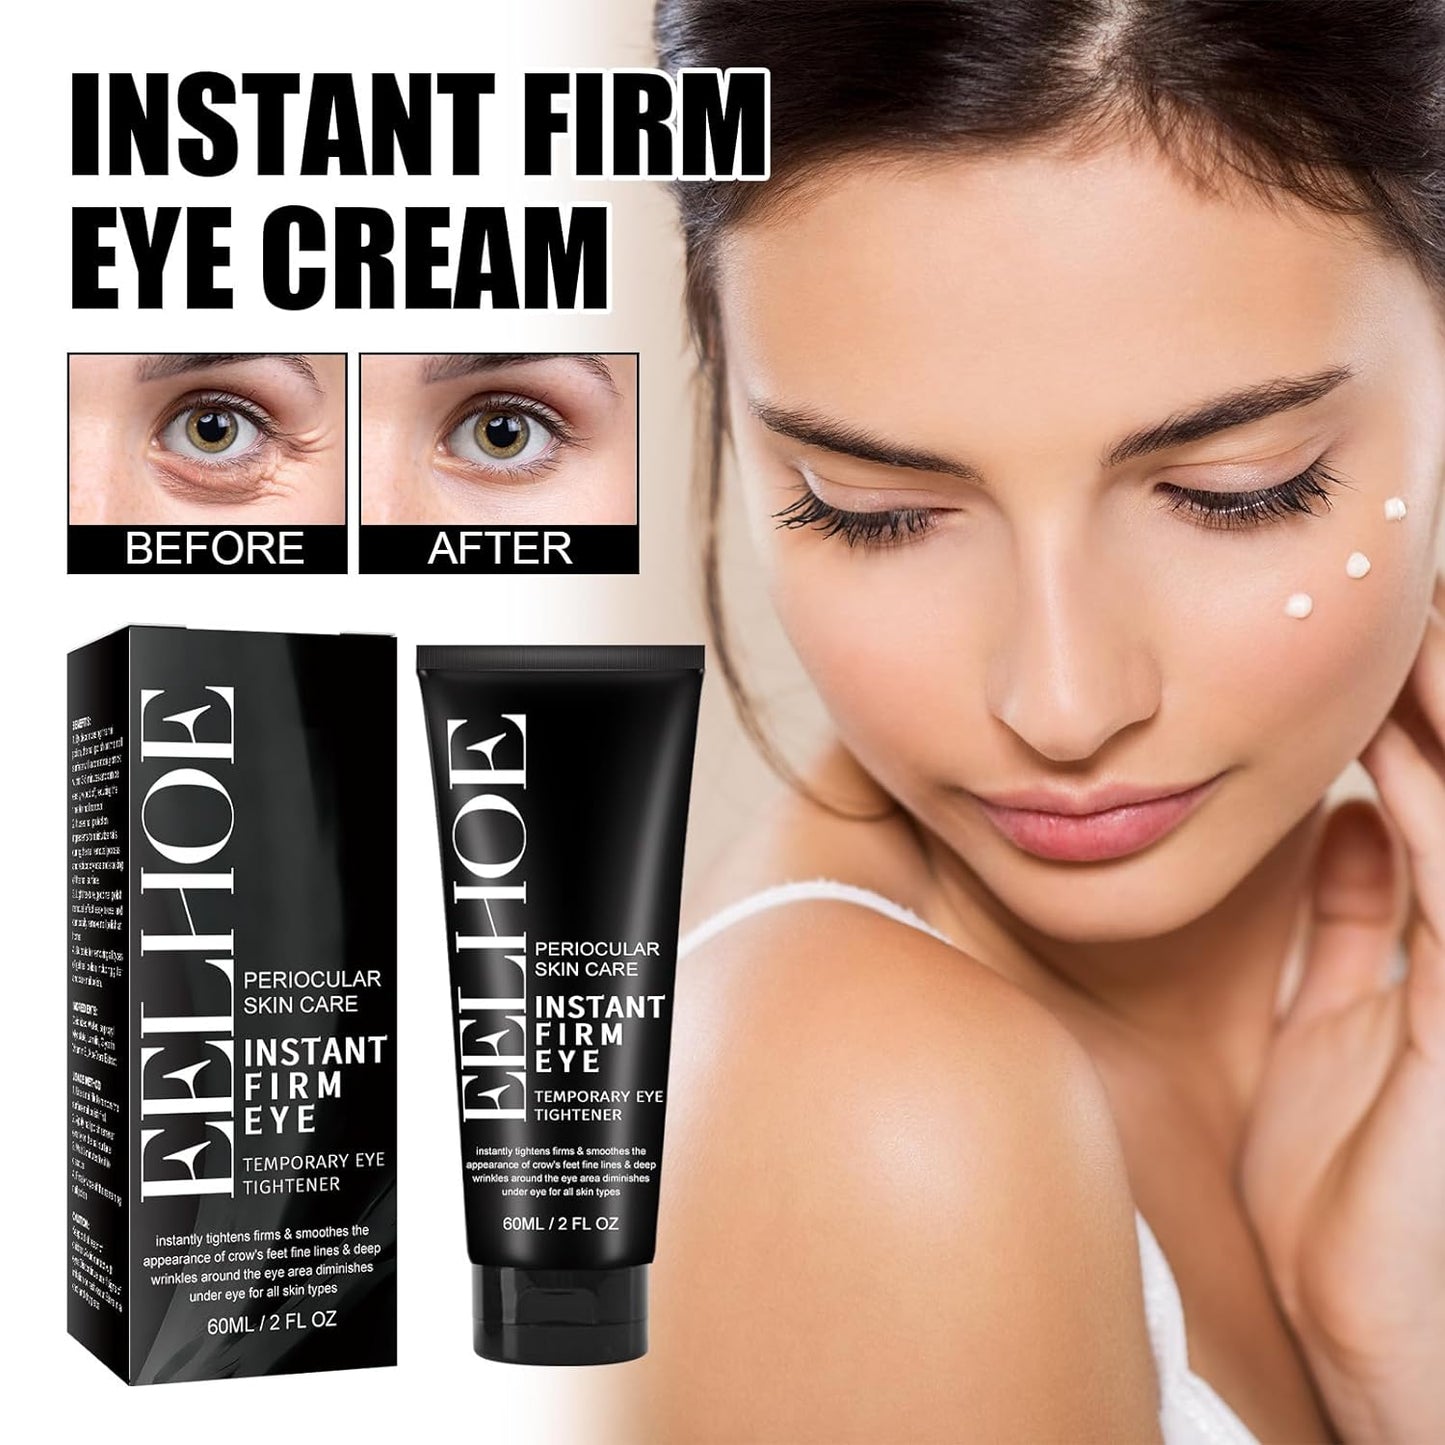 LYW 60ml Eye Treatment Creams，Instant Firm Eye Cream, Temporary Eye Tightener, Instant Under Eye Tightener, Instant Firm Eye Tightener Eye Bag Cream